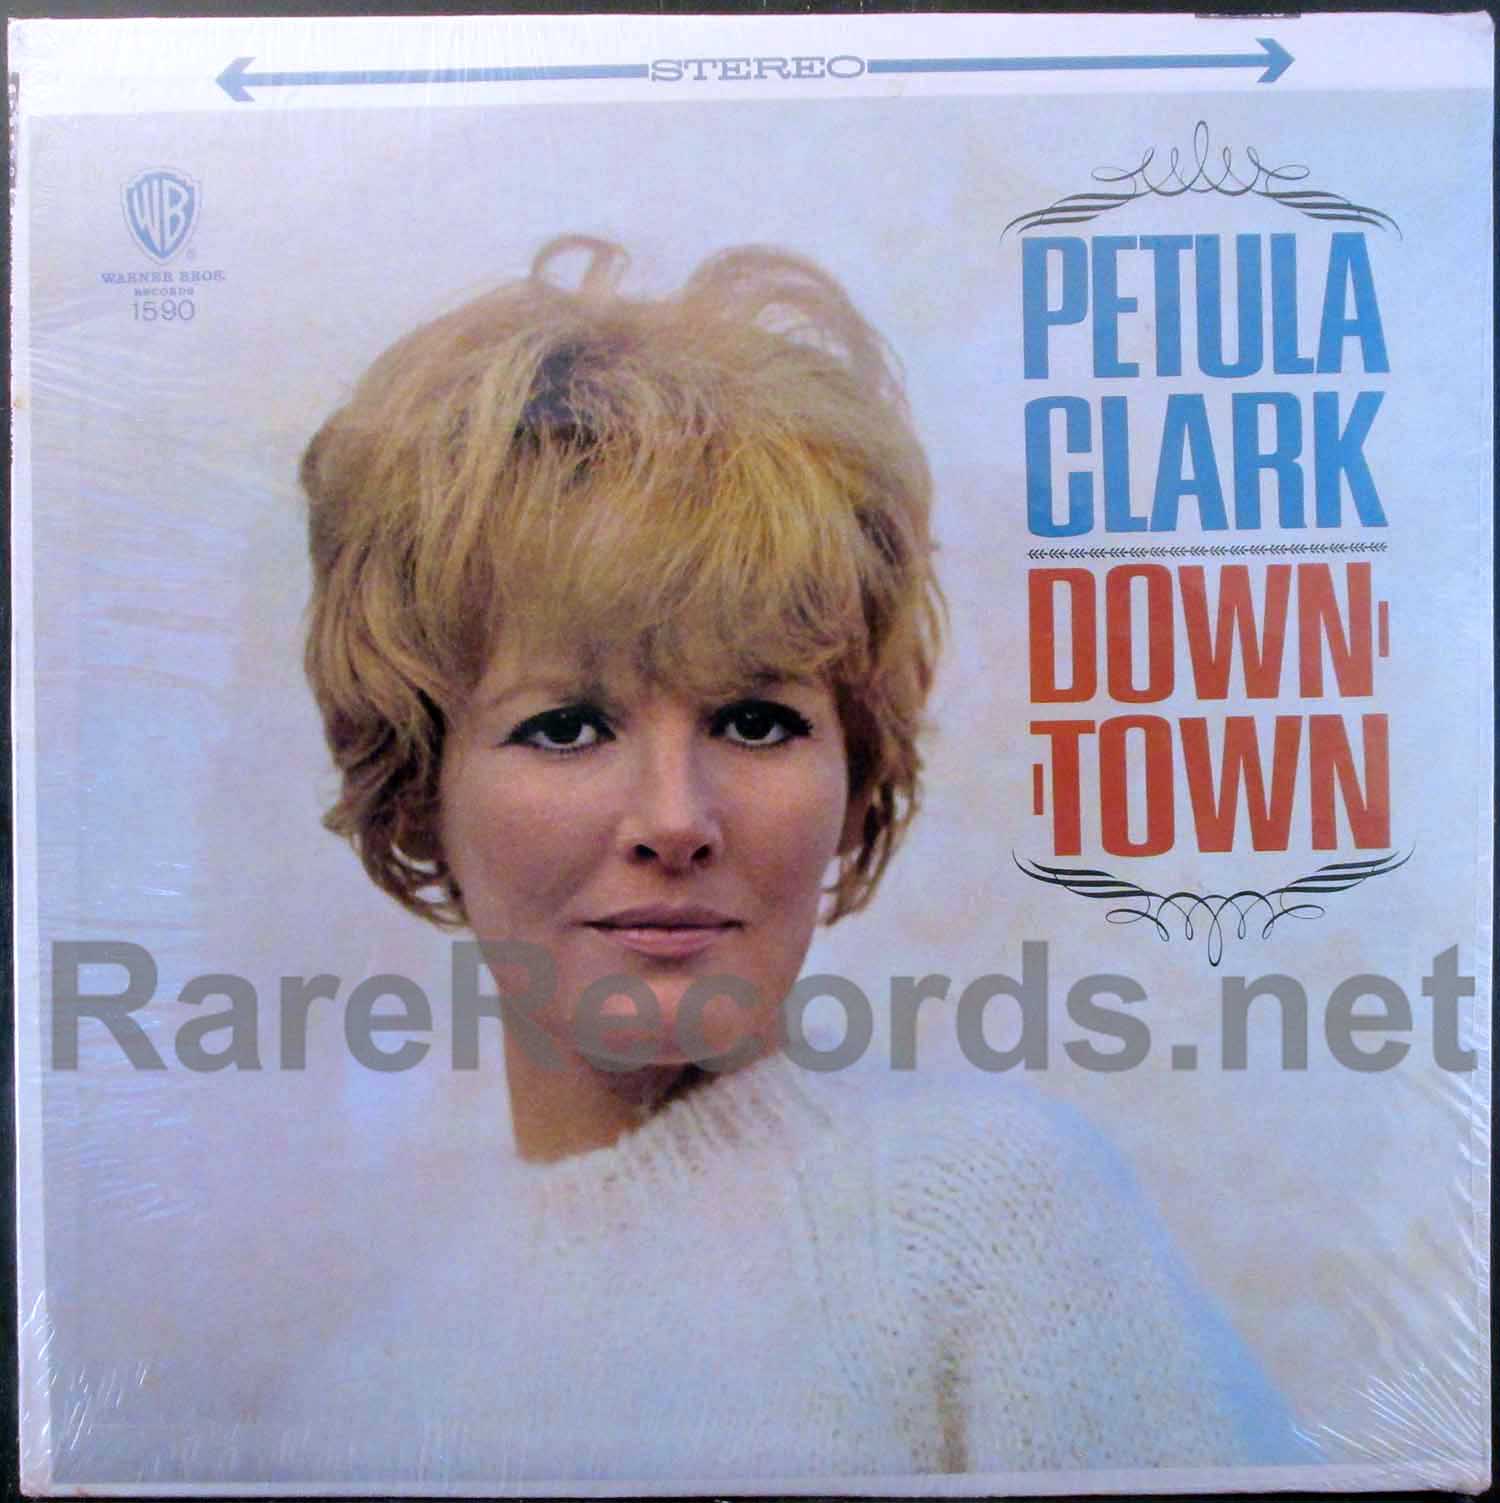 petula clark - downtown u.s. stereo LP